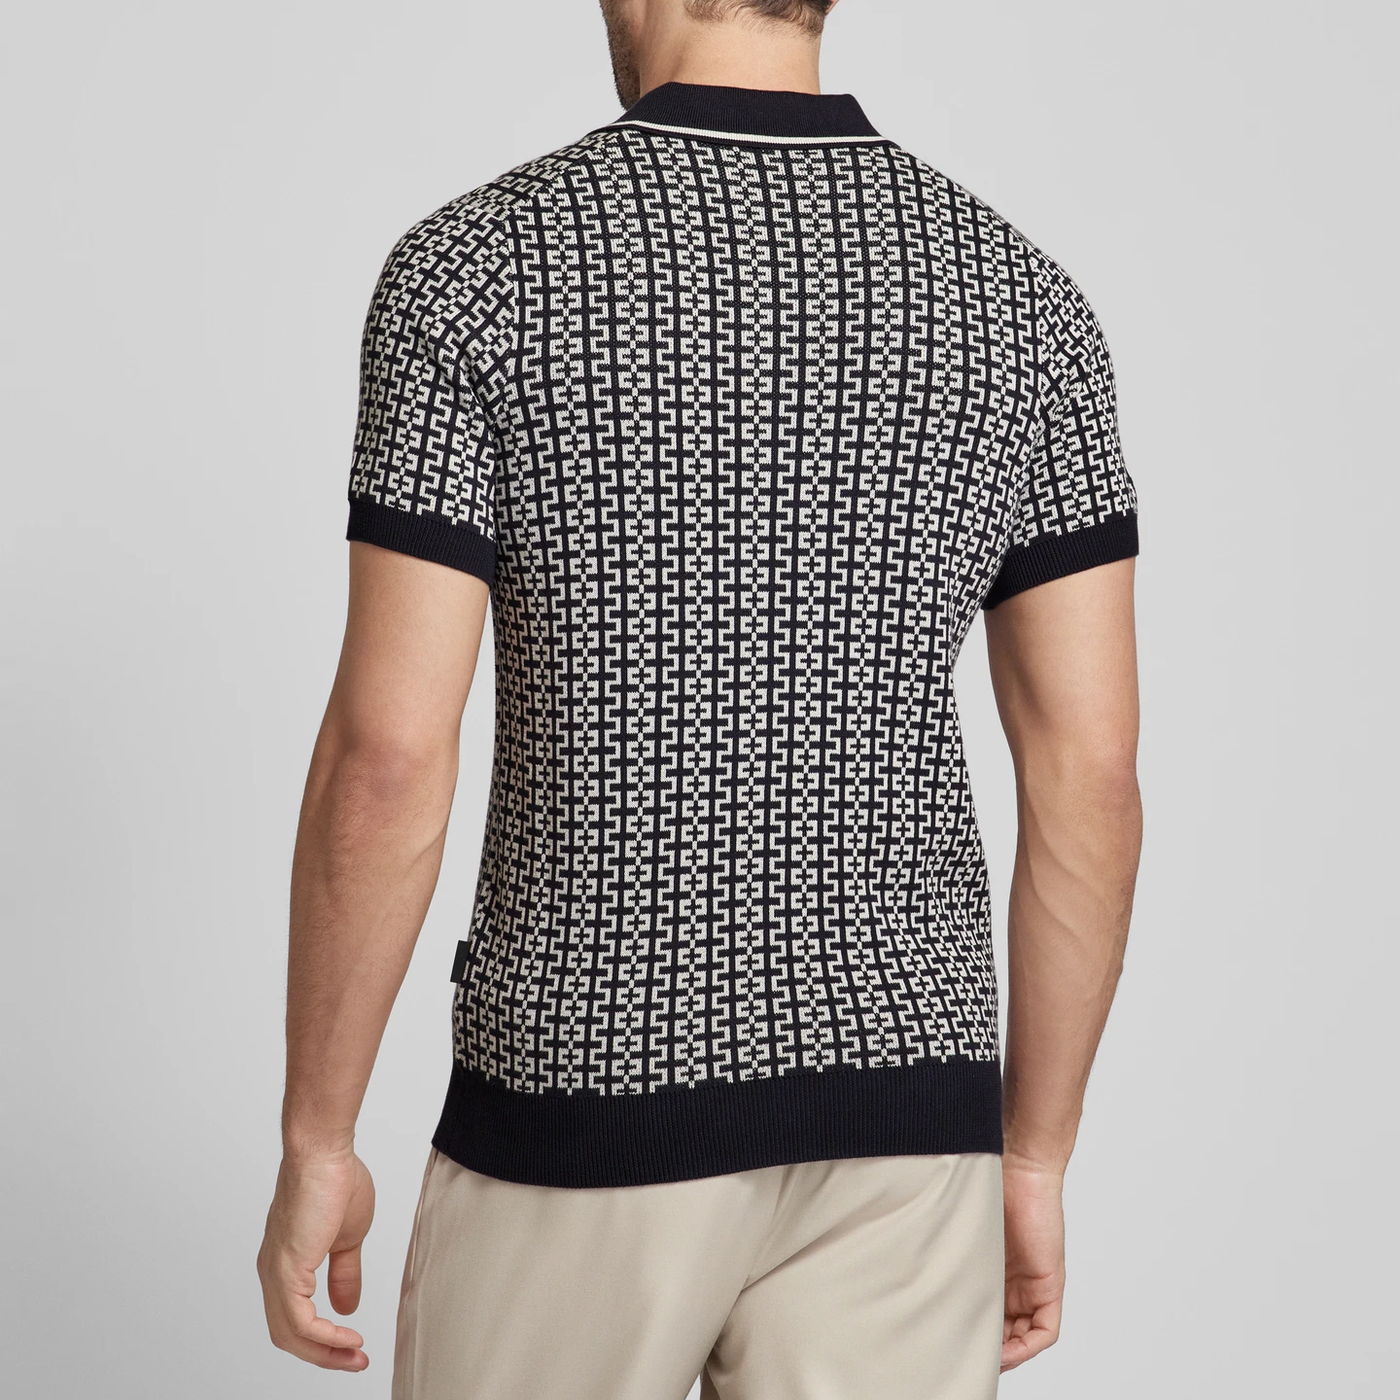 Gotstyle Fashion - Strellson Polos All-Over Geo Print Knit Polo - Dark Navy